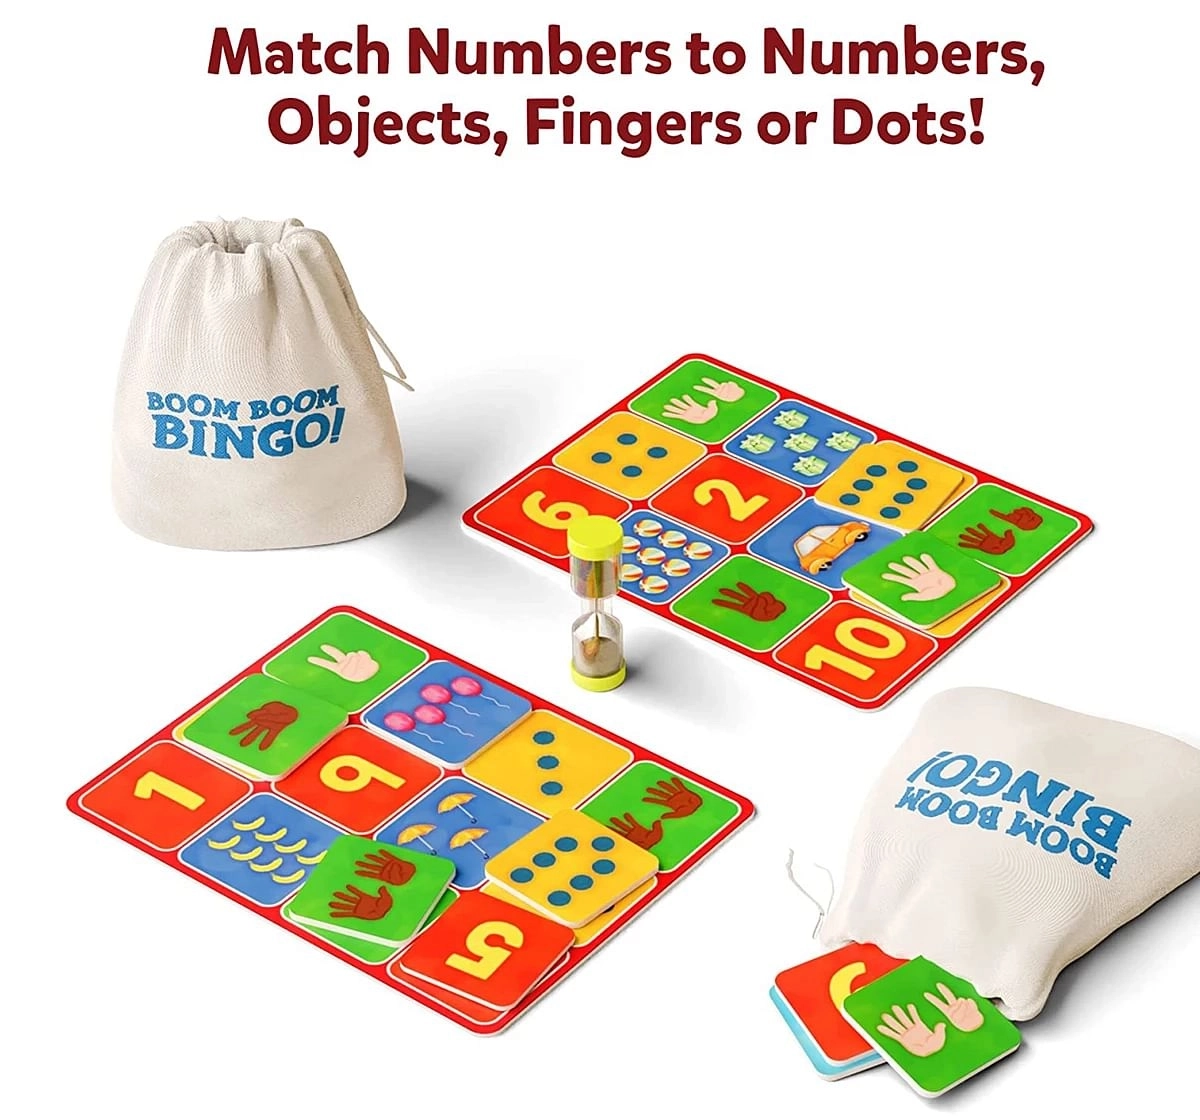 Skillmatics Boom Boom Bingo Numbers & Counting Multicolor 4Y+